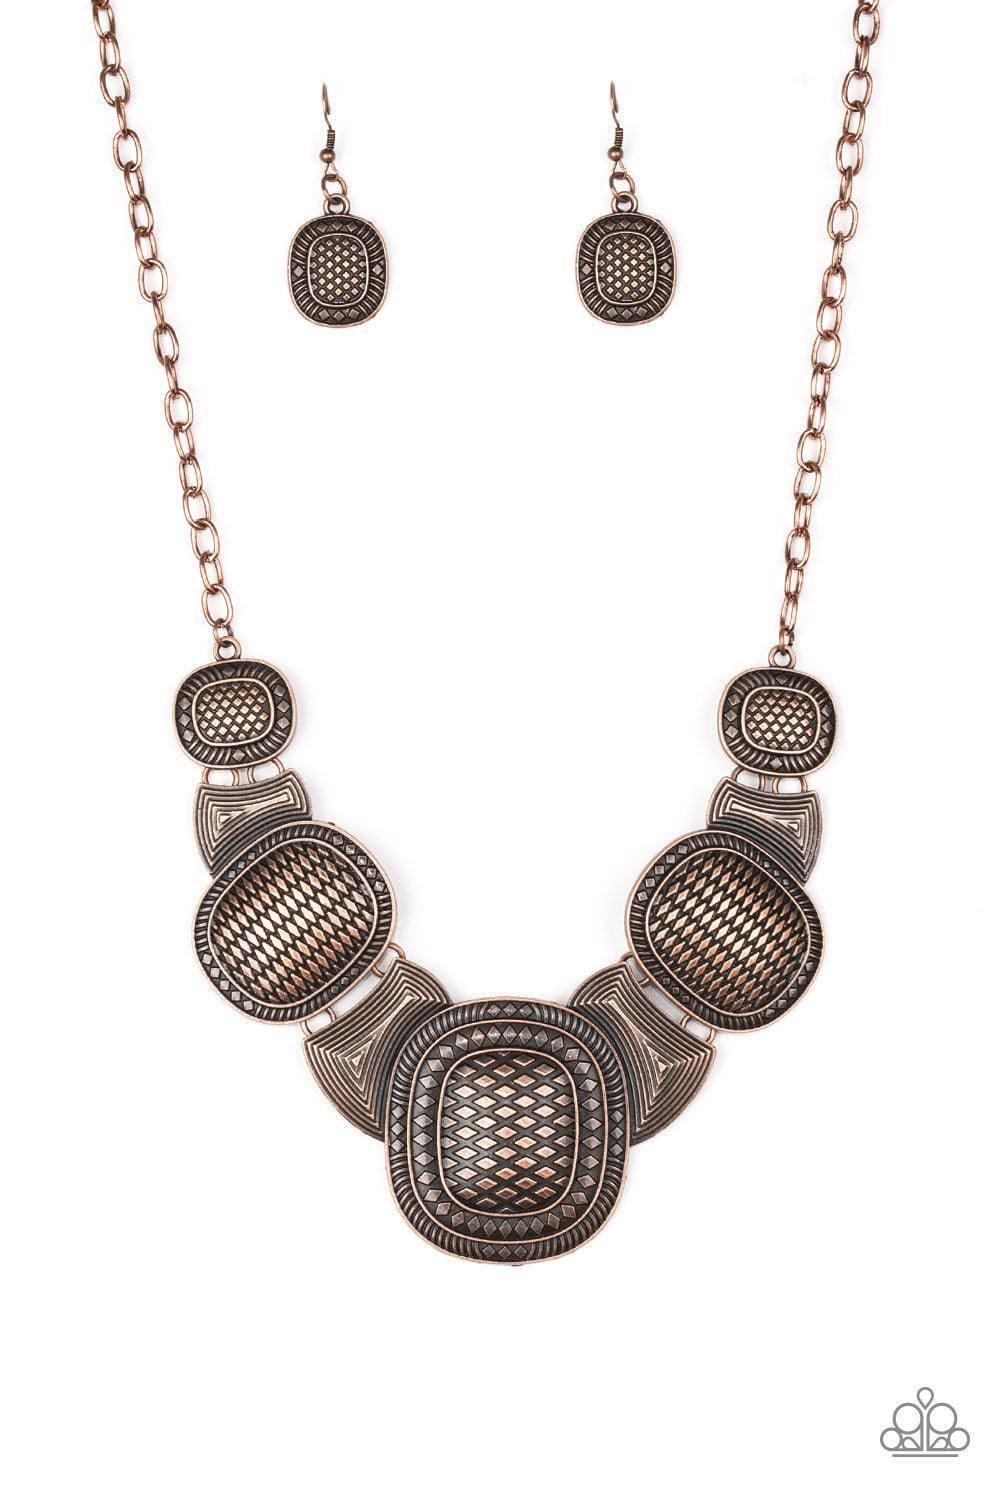 Paparazzi Accessories - Prehistoric Powerhouse - Copper Necklace - Bling by JessieK